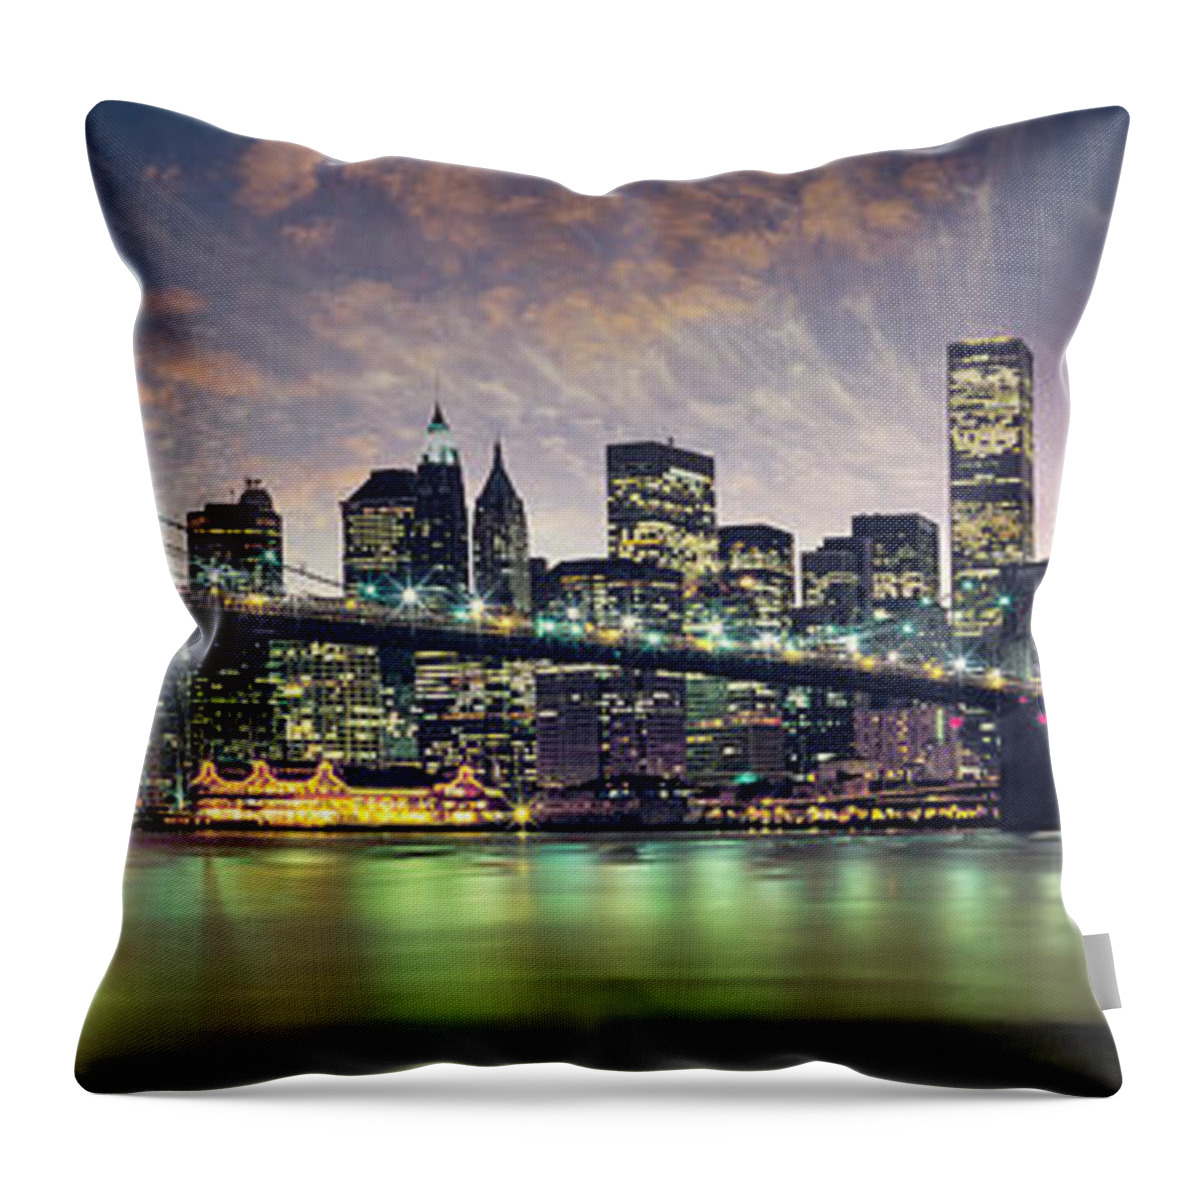 New York City Skyline Throw Pillow featuring the photograph New York City Skyline by Jon Neidert